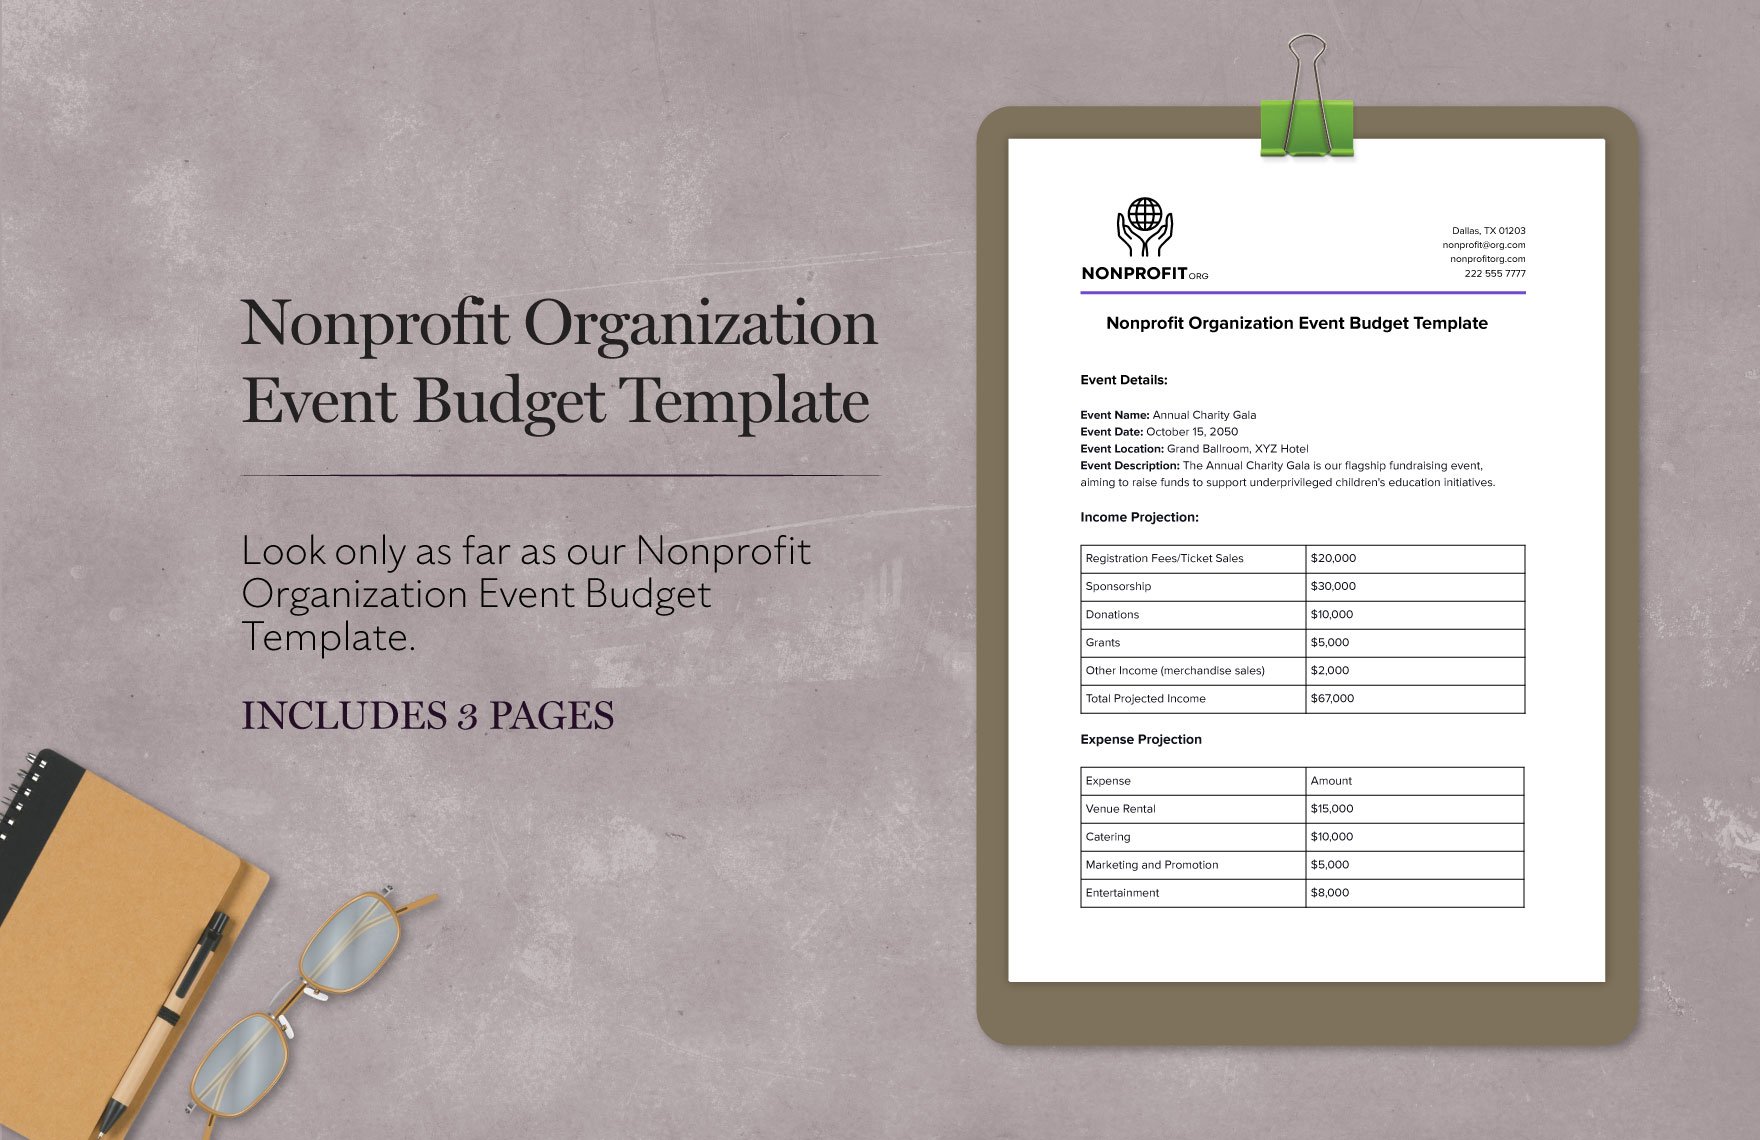 Nonprofit Organization Event Budget Template